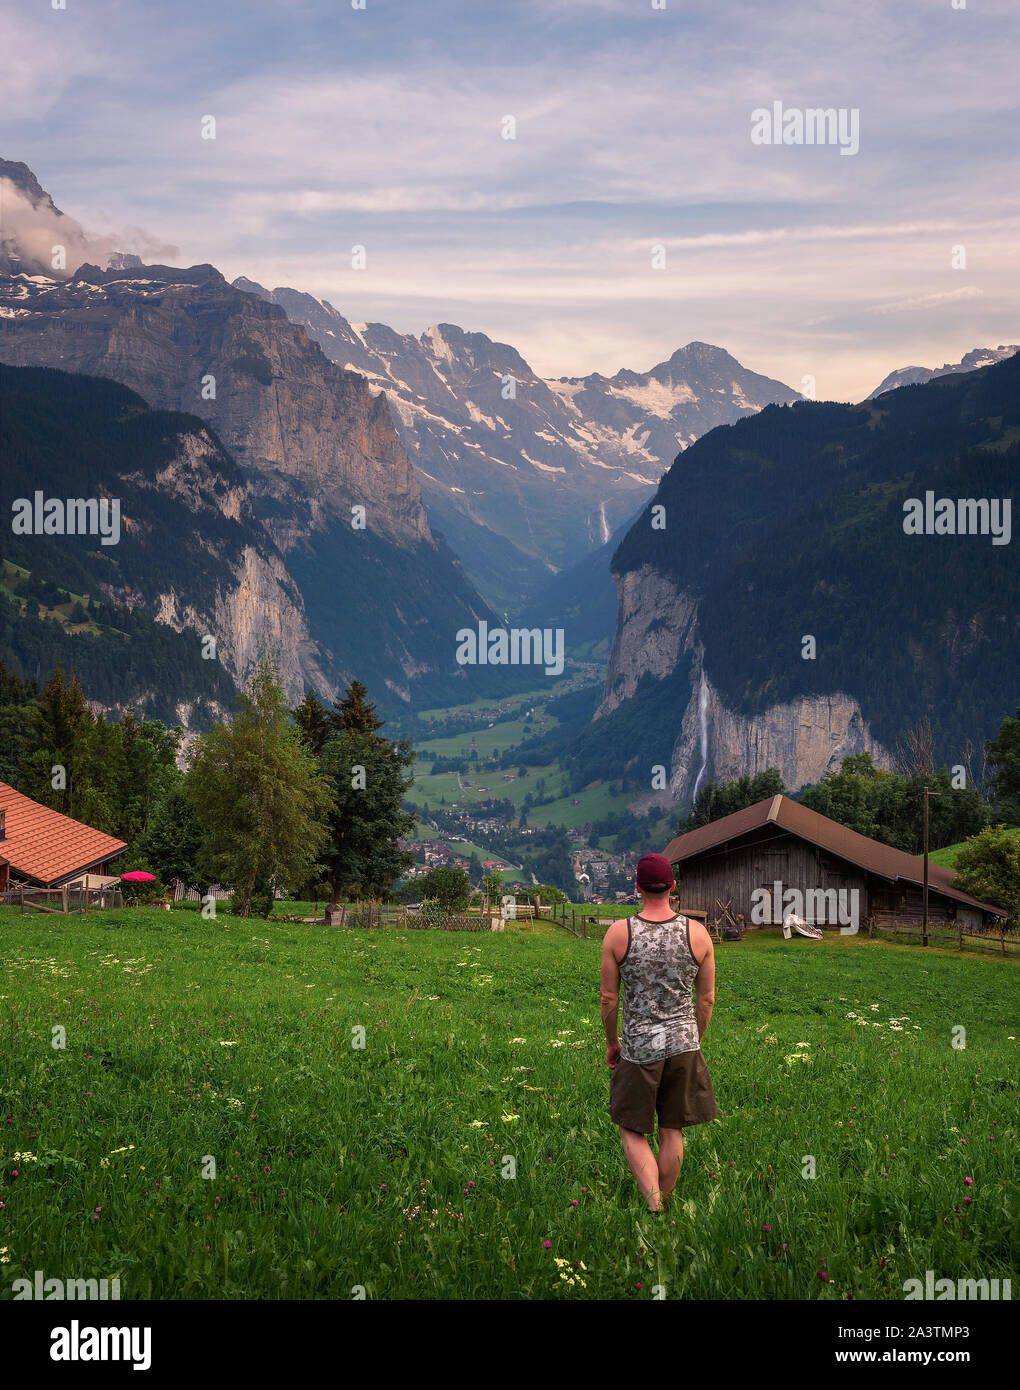 Tourist looks at the Lauterbrunnen valley from the village of Wengen, Switzerland Stock Photo